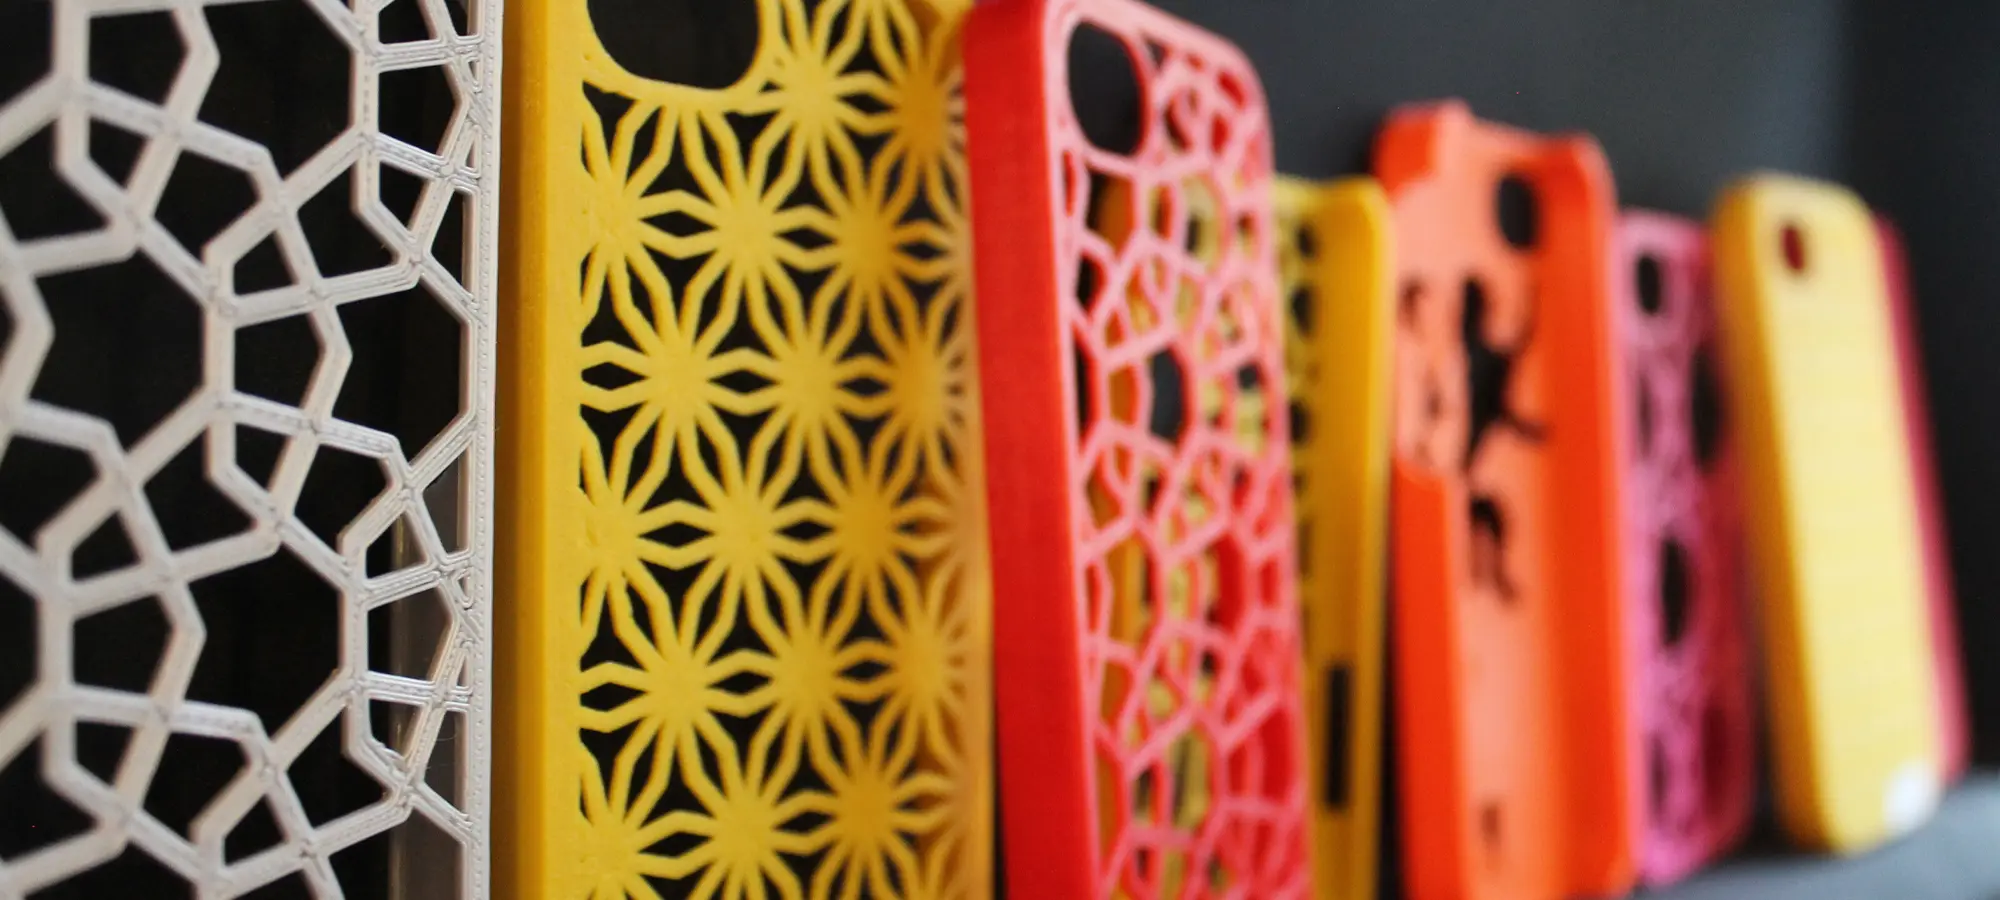 3D printed phone gadgets